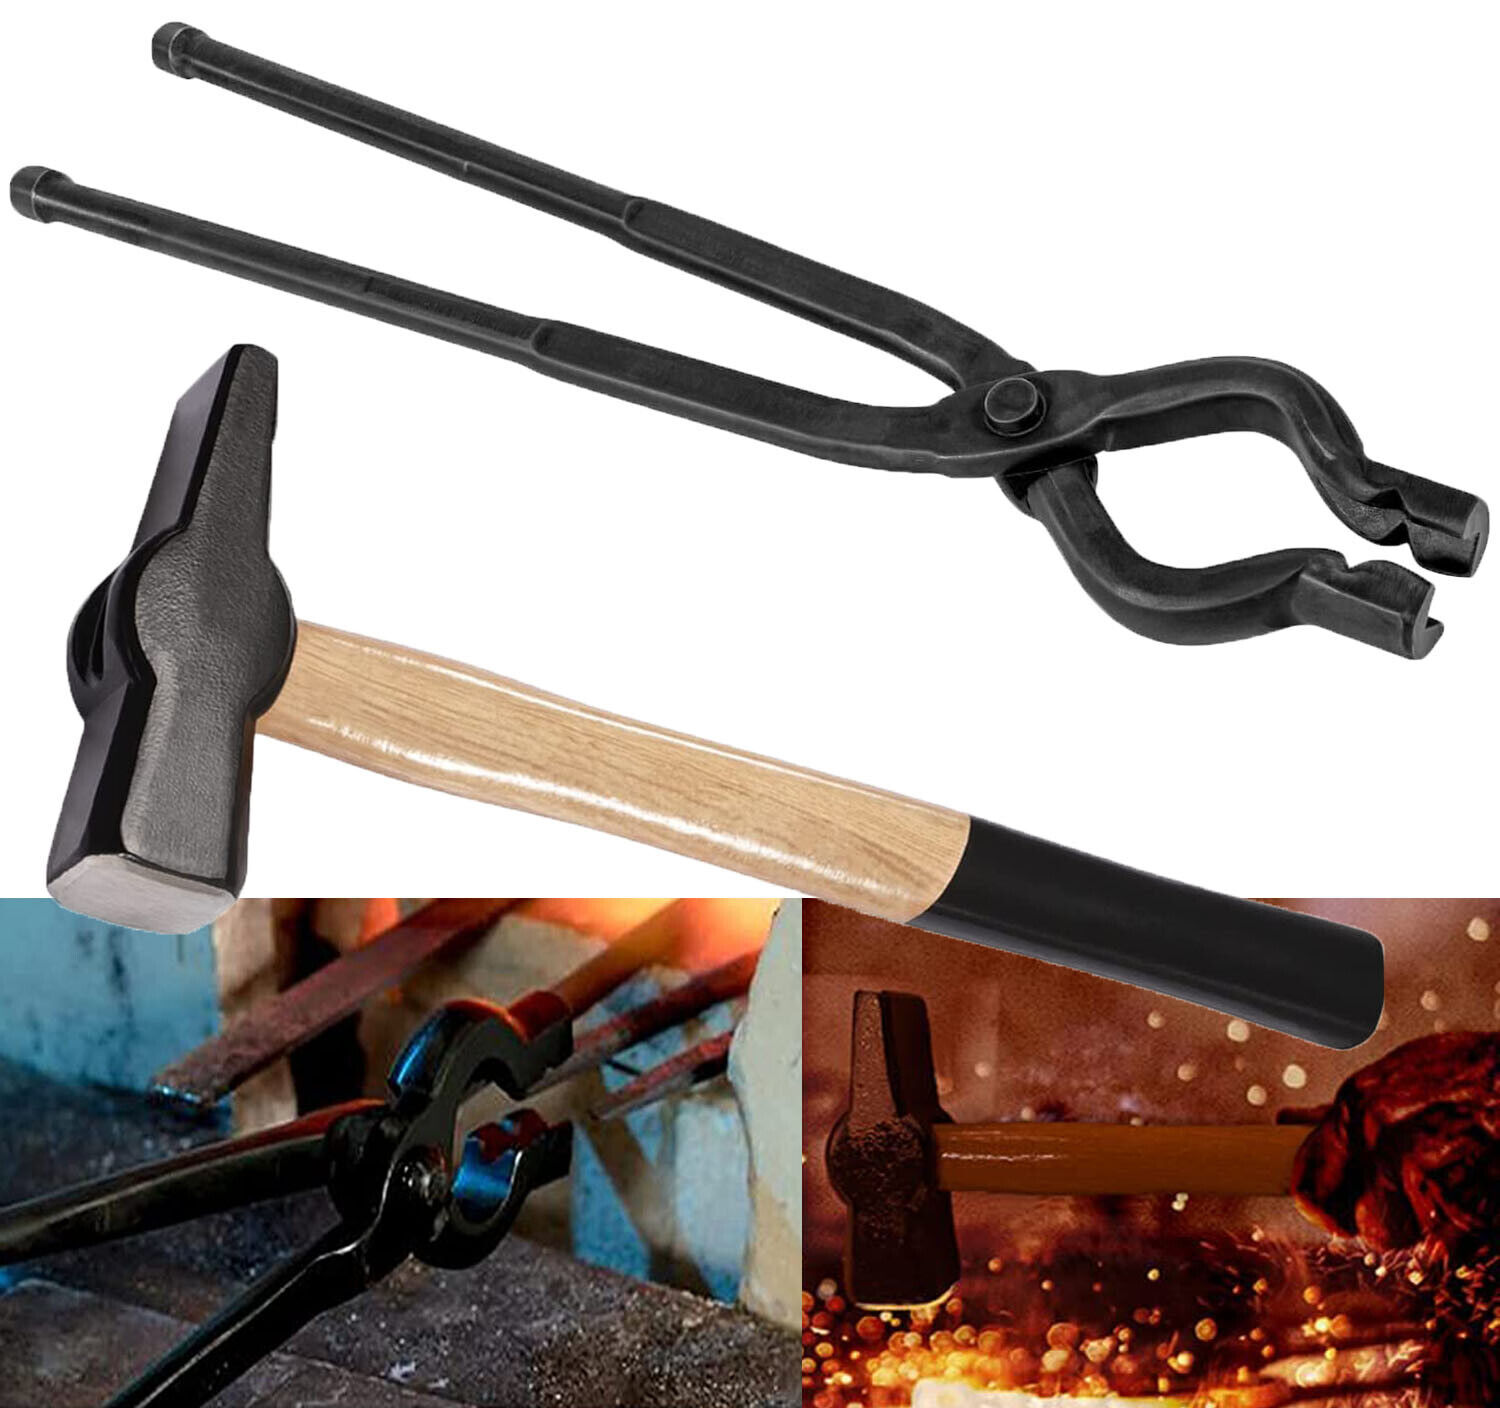 Blacksmith 17” V-Bit Bolt Tongs & 1.5KG (3.3LB) Hammer Kit Knifemaking Tools Set